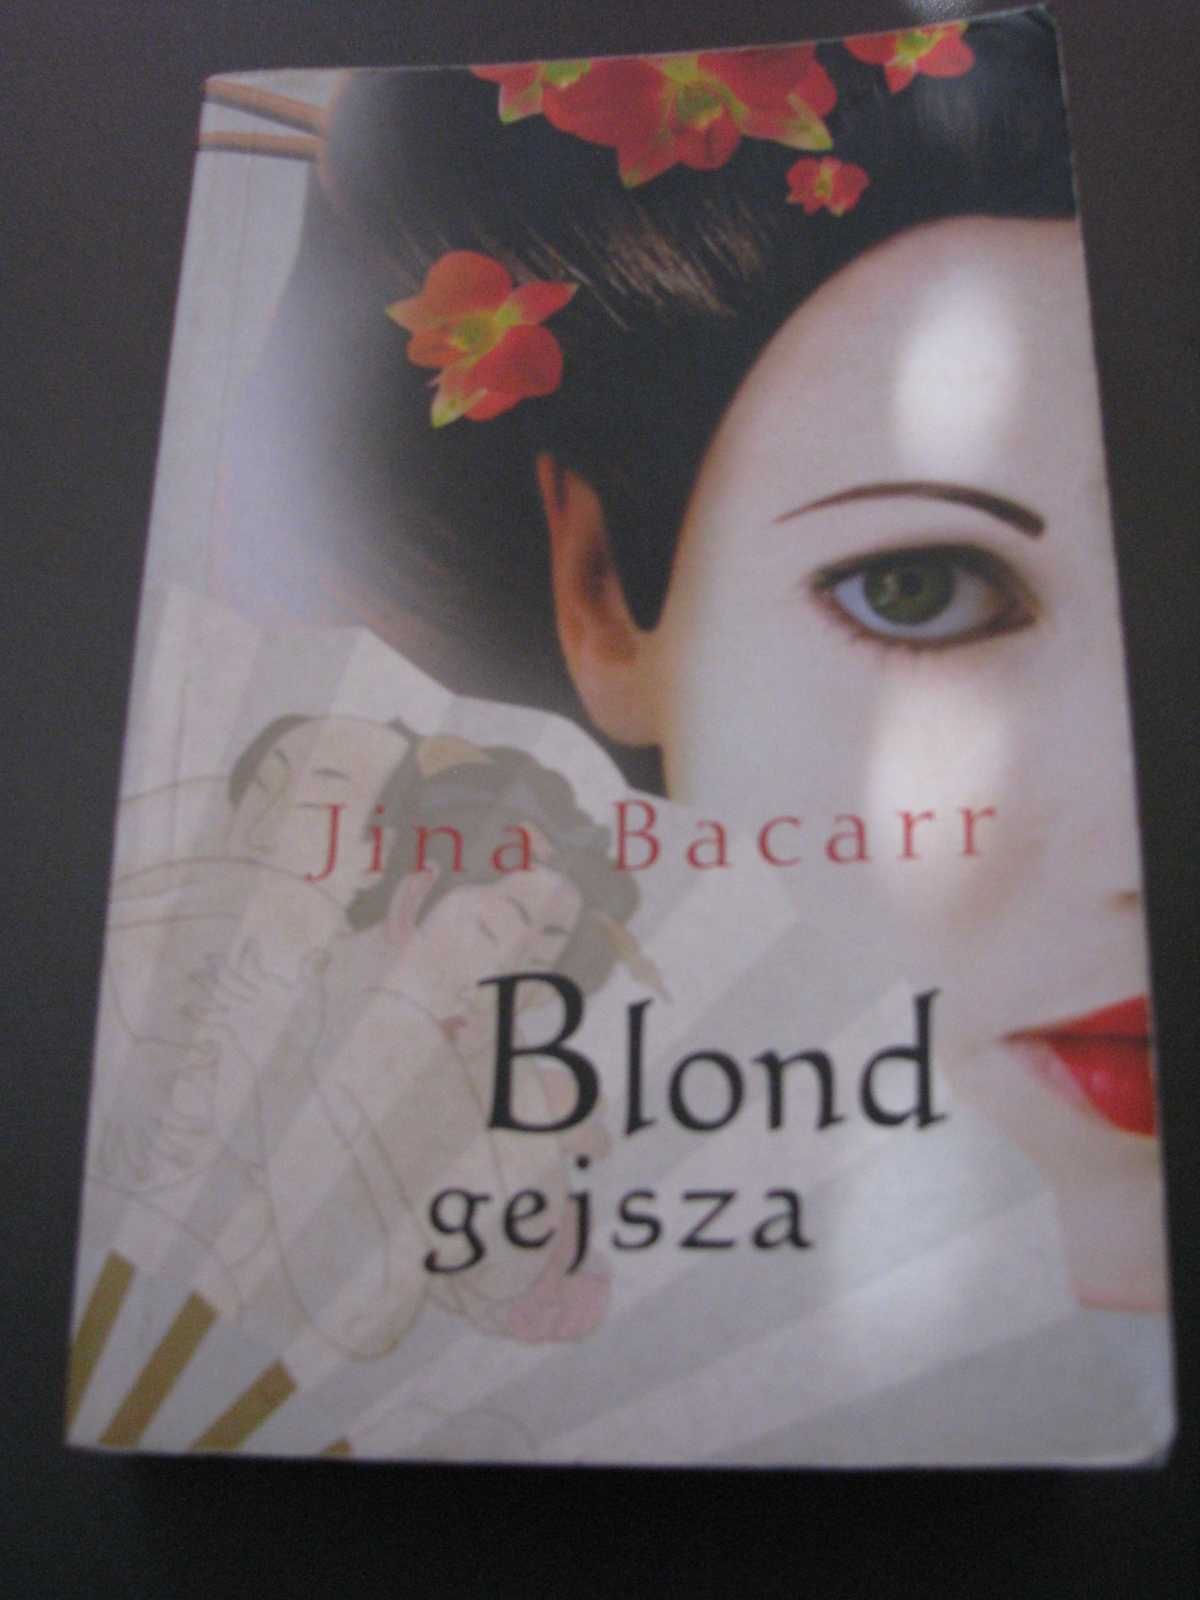 Jina Bacarr "Blond Gejsza"